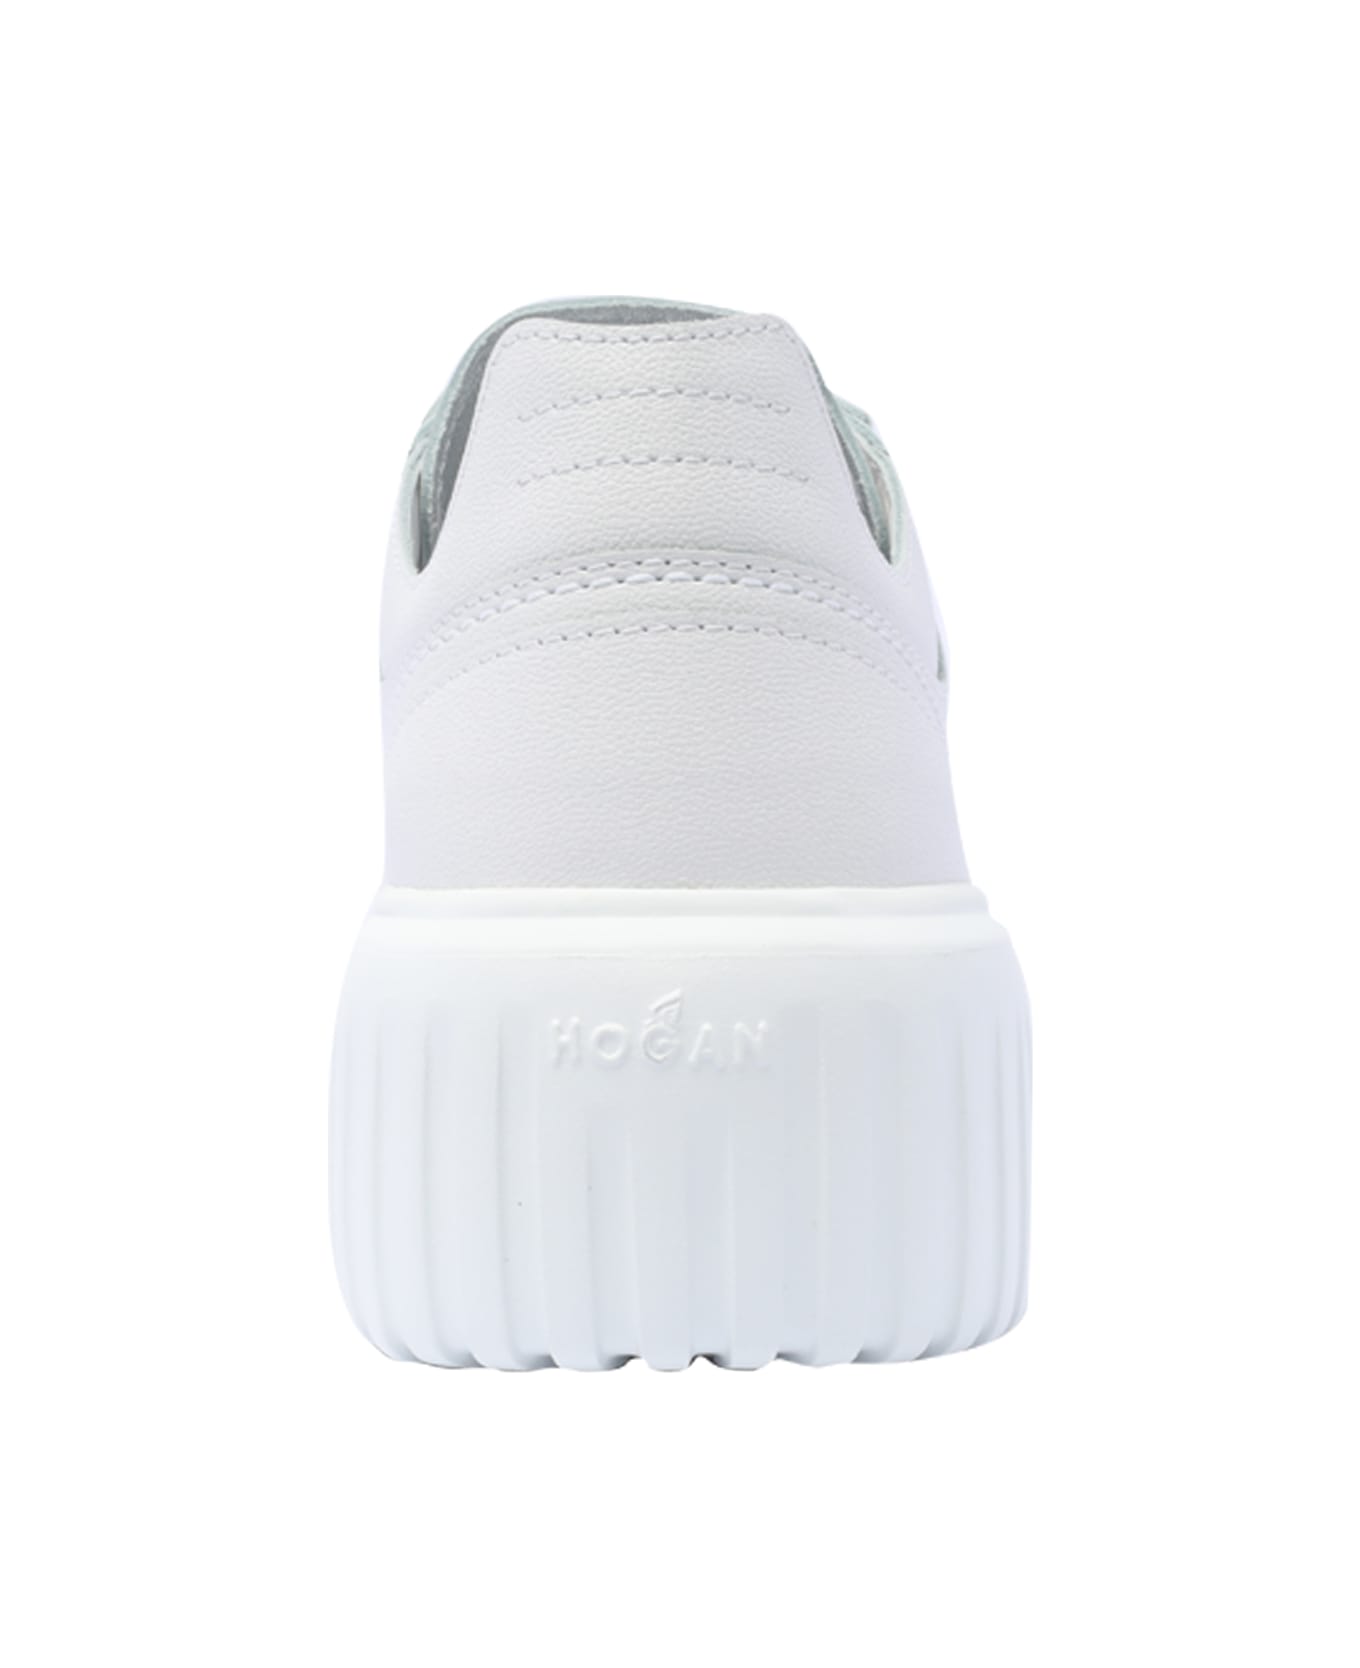 Hogan H-stripes Sneakers Sneakers - White